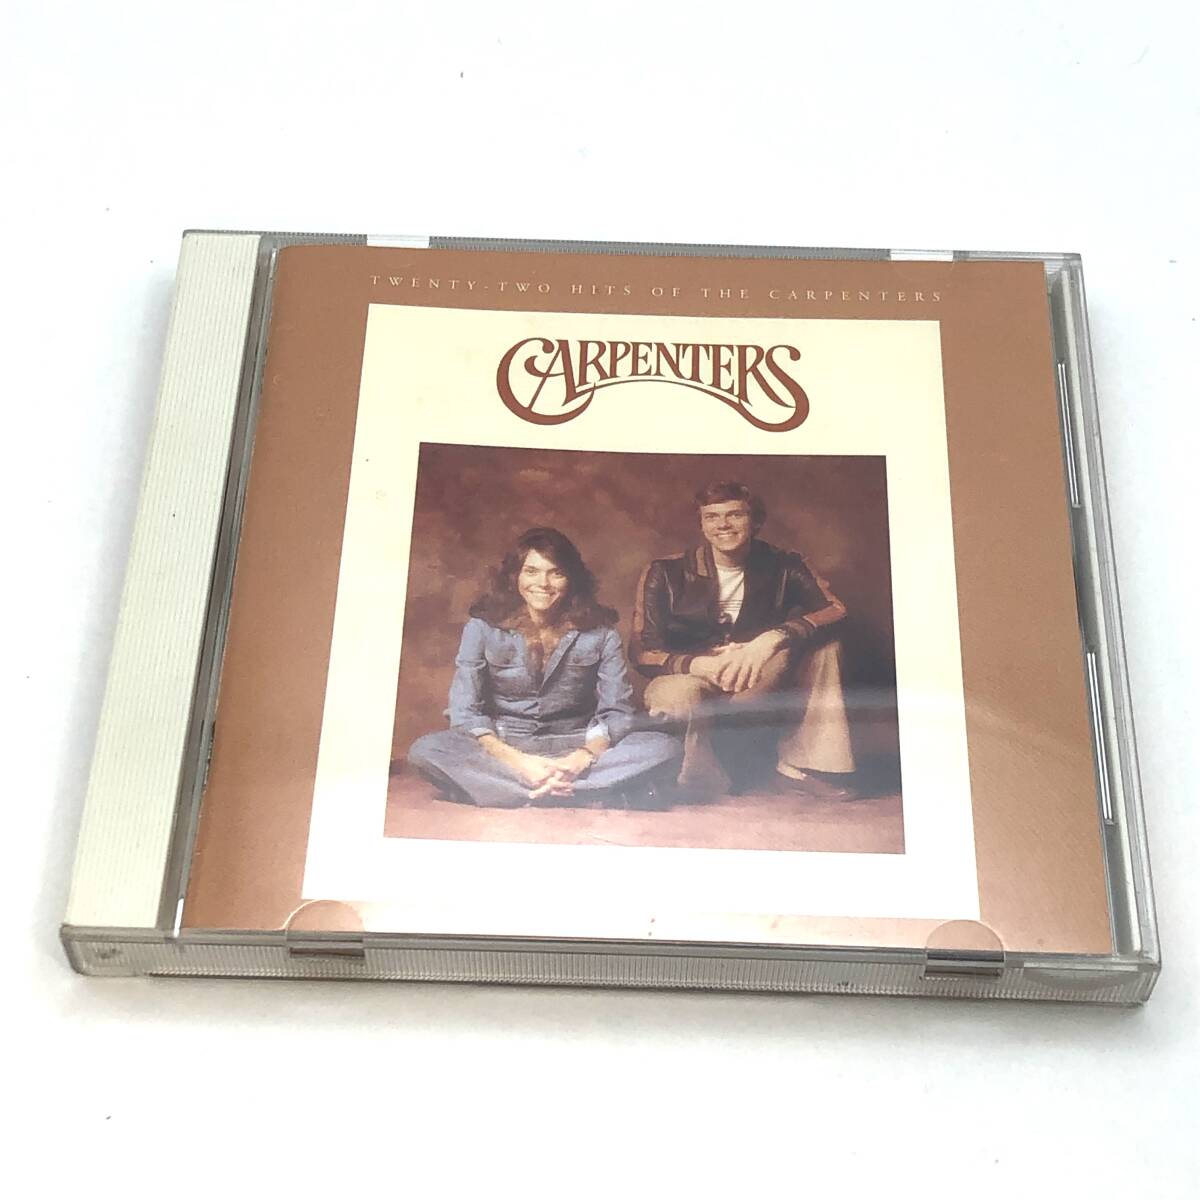 Carpenters カーペンターズ 青春の輝き ベスト・オブ・カーペンターズ POCM-1540 再生未確認 CD アルバム _画像1